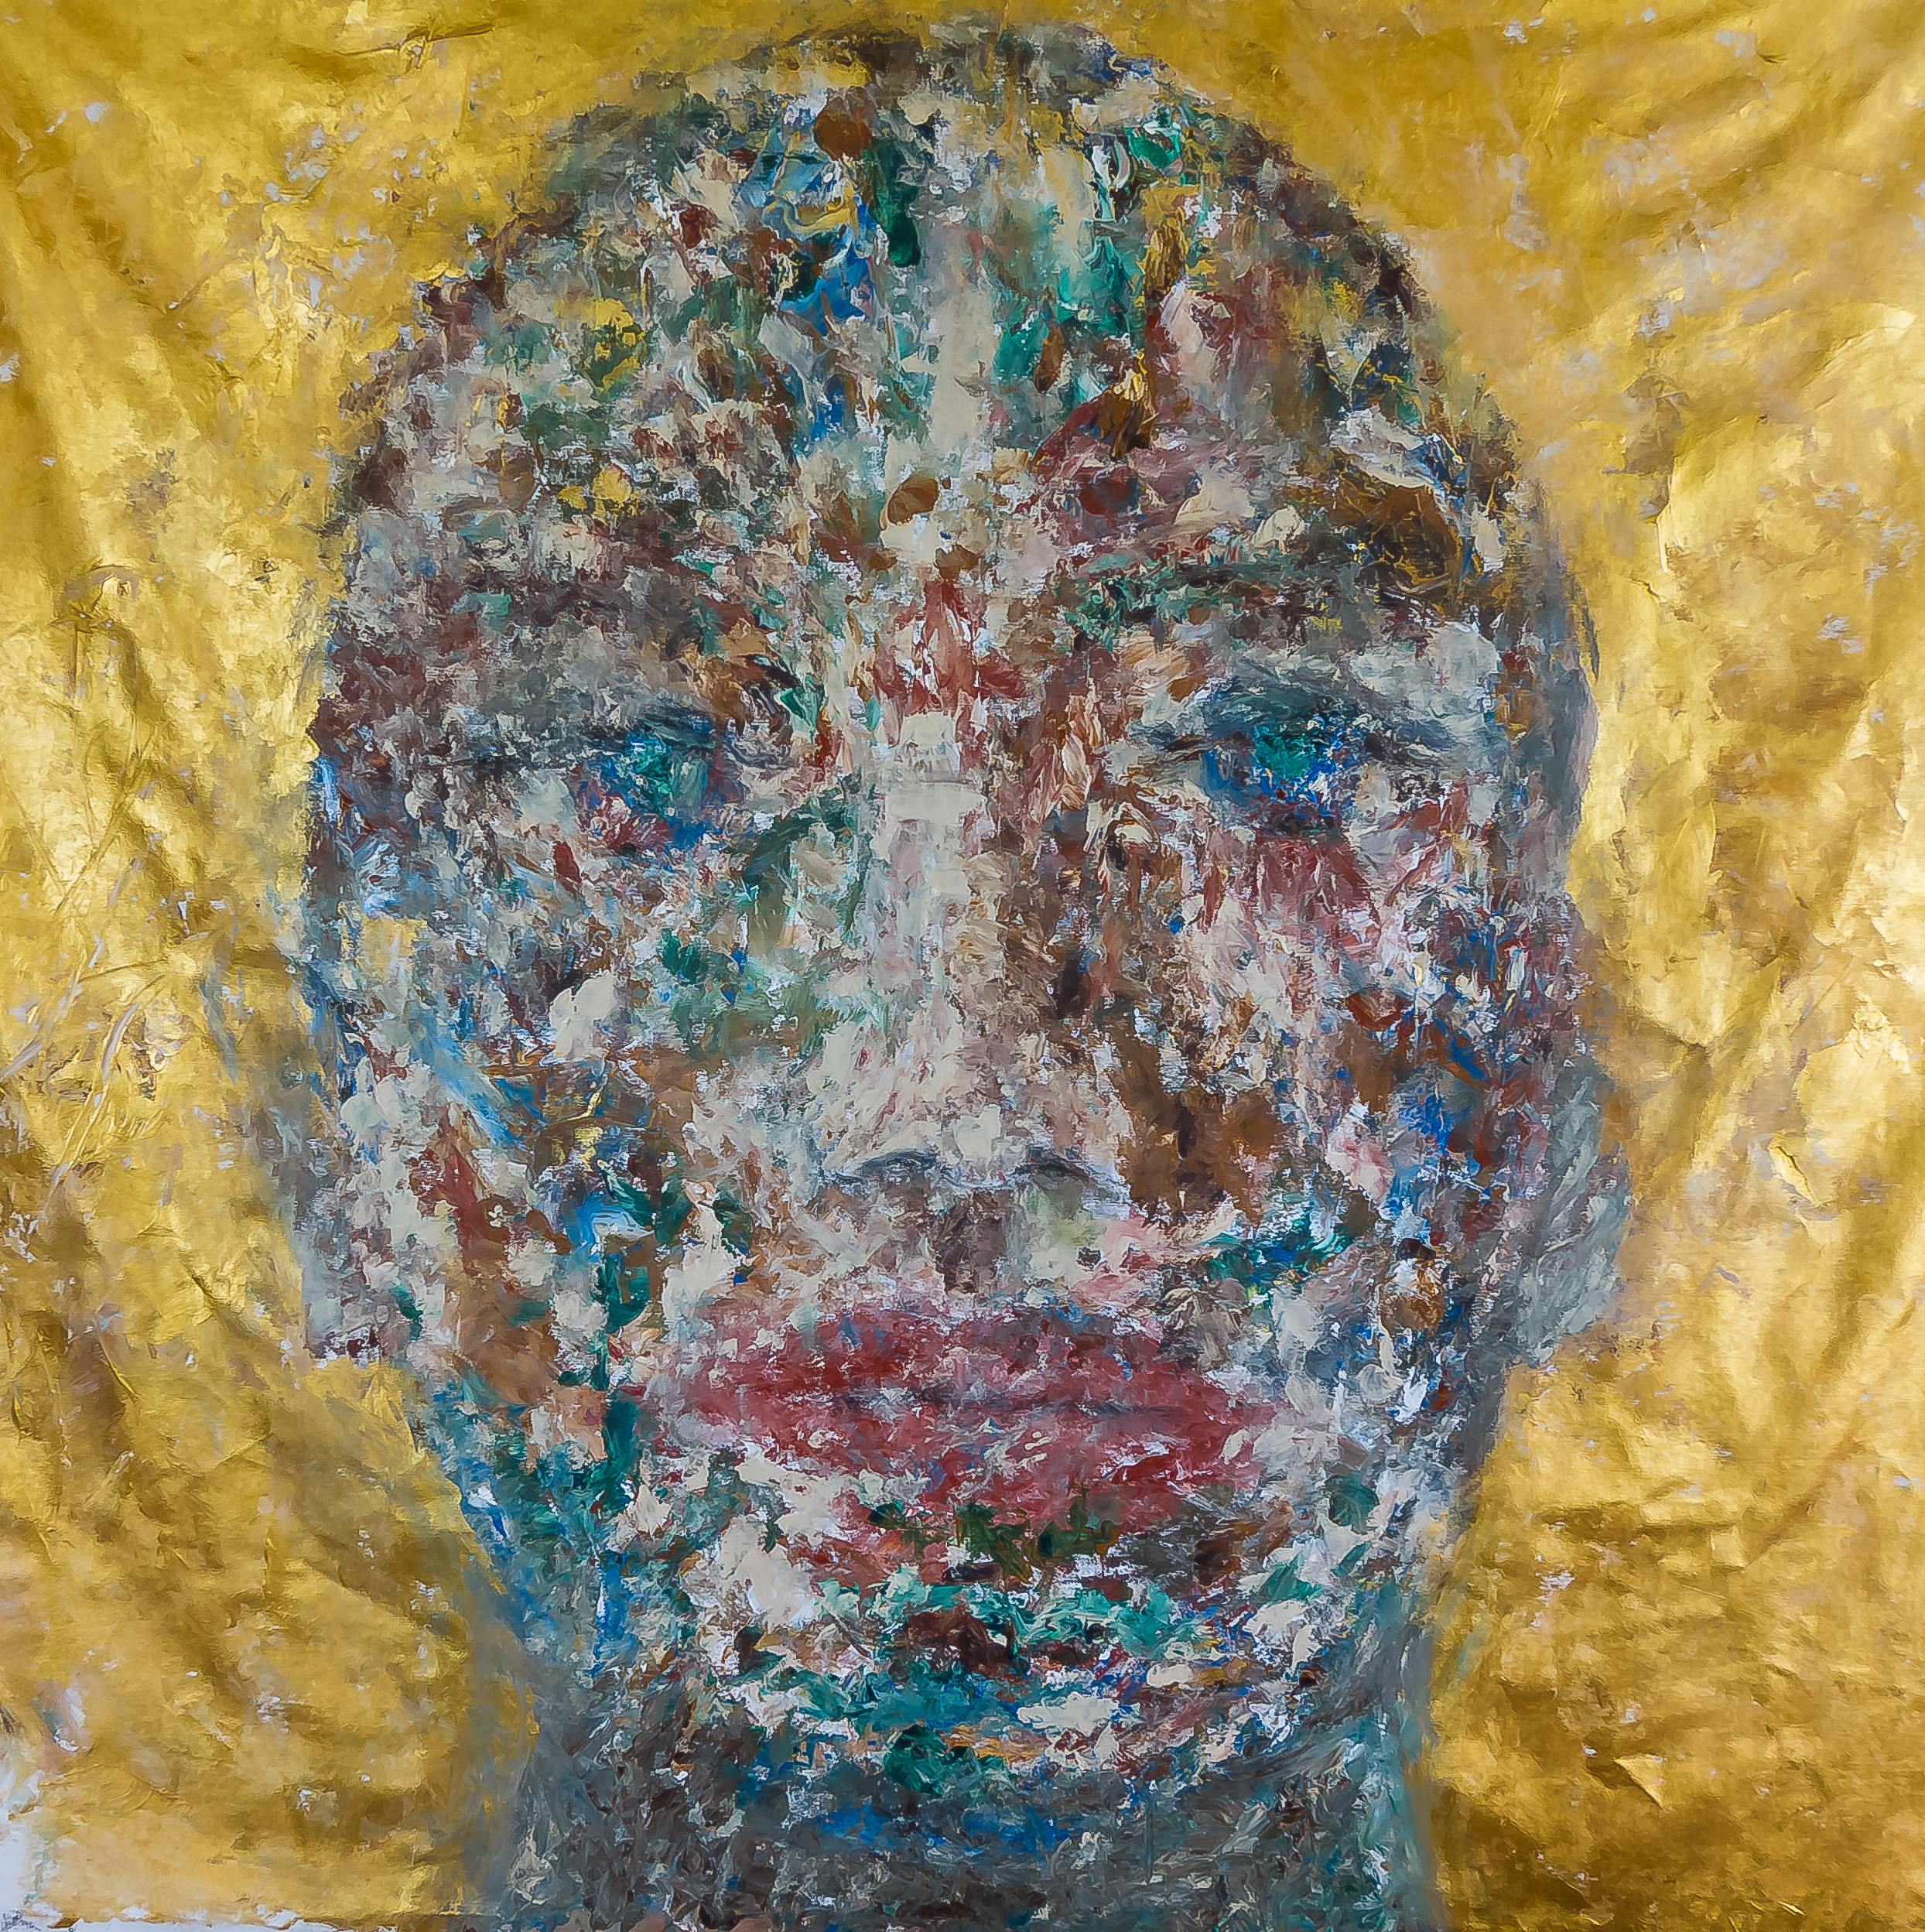 warren sulatycky, "gold portrait", acrylic on raw canvas, 60 x 100 inches, 2014, 